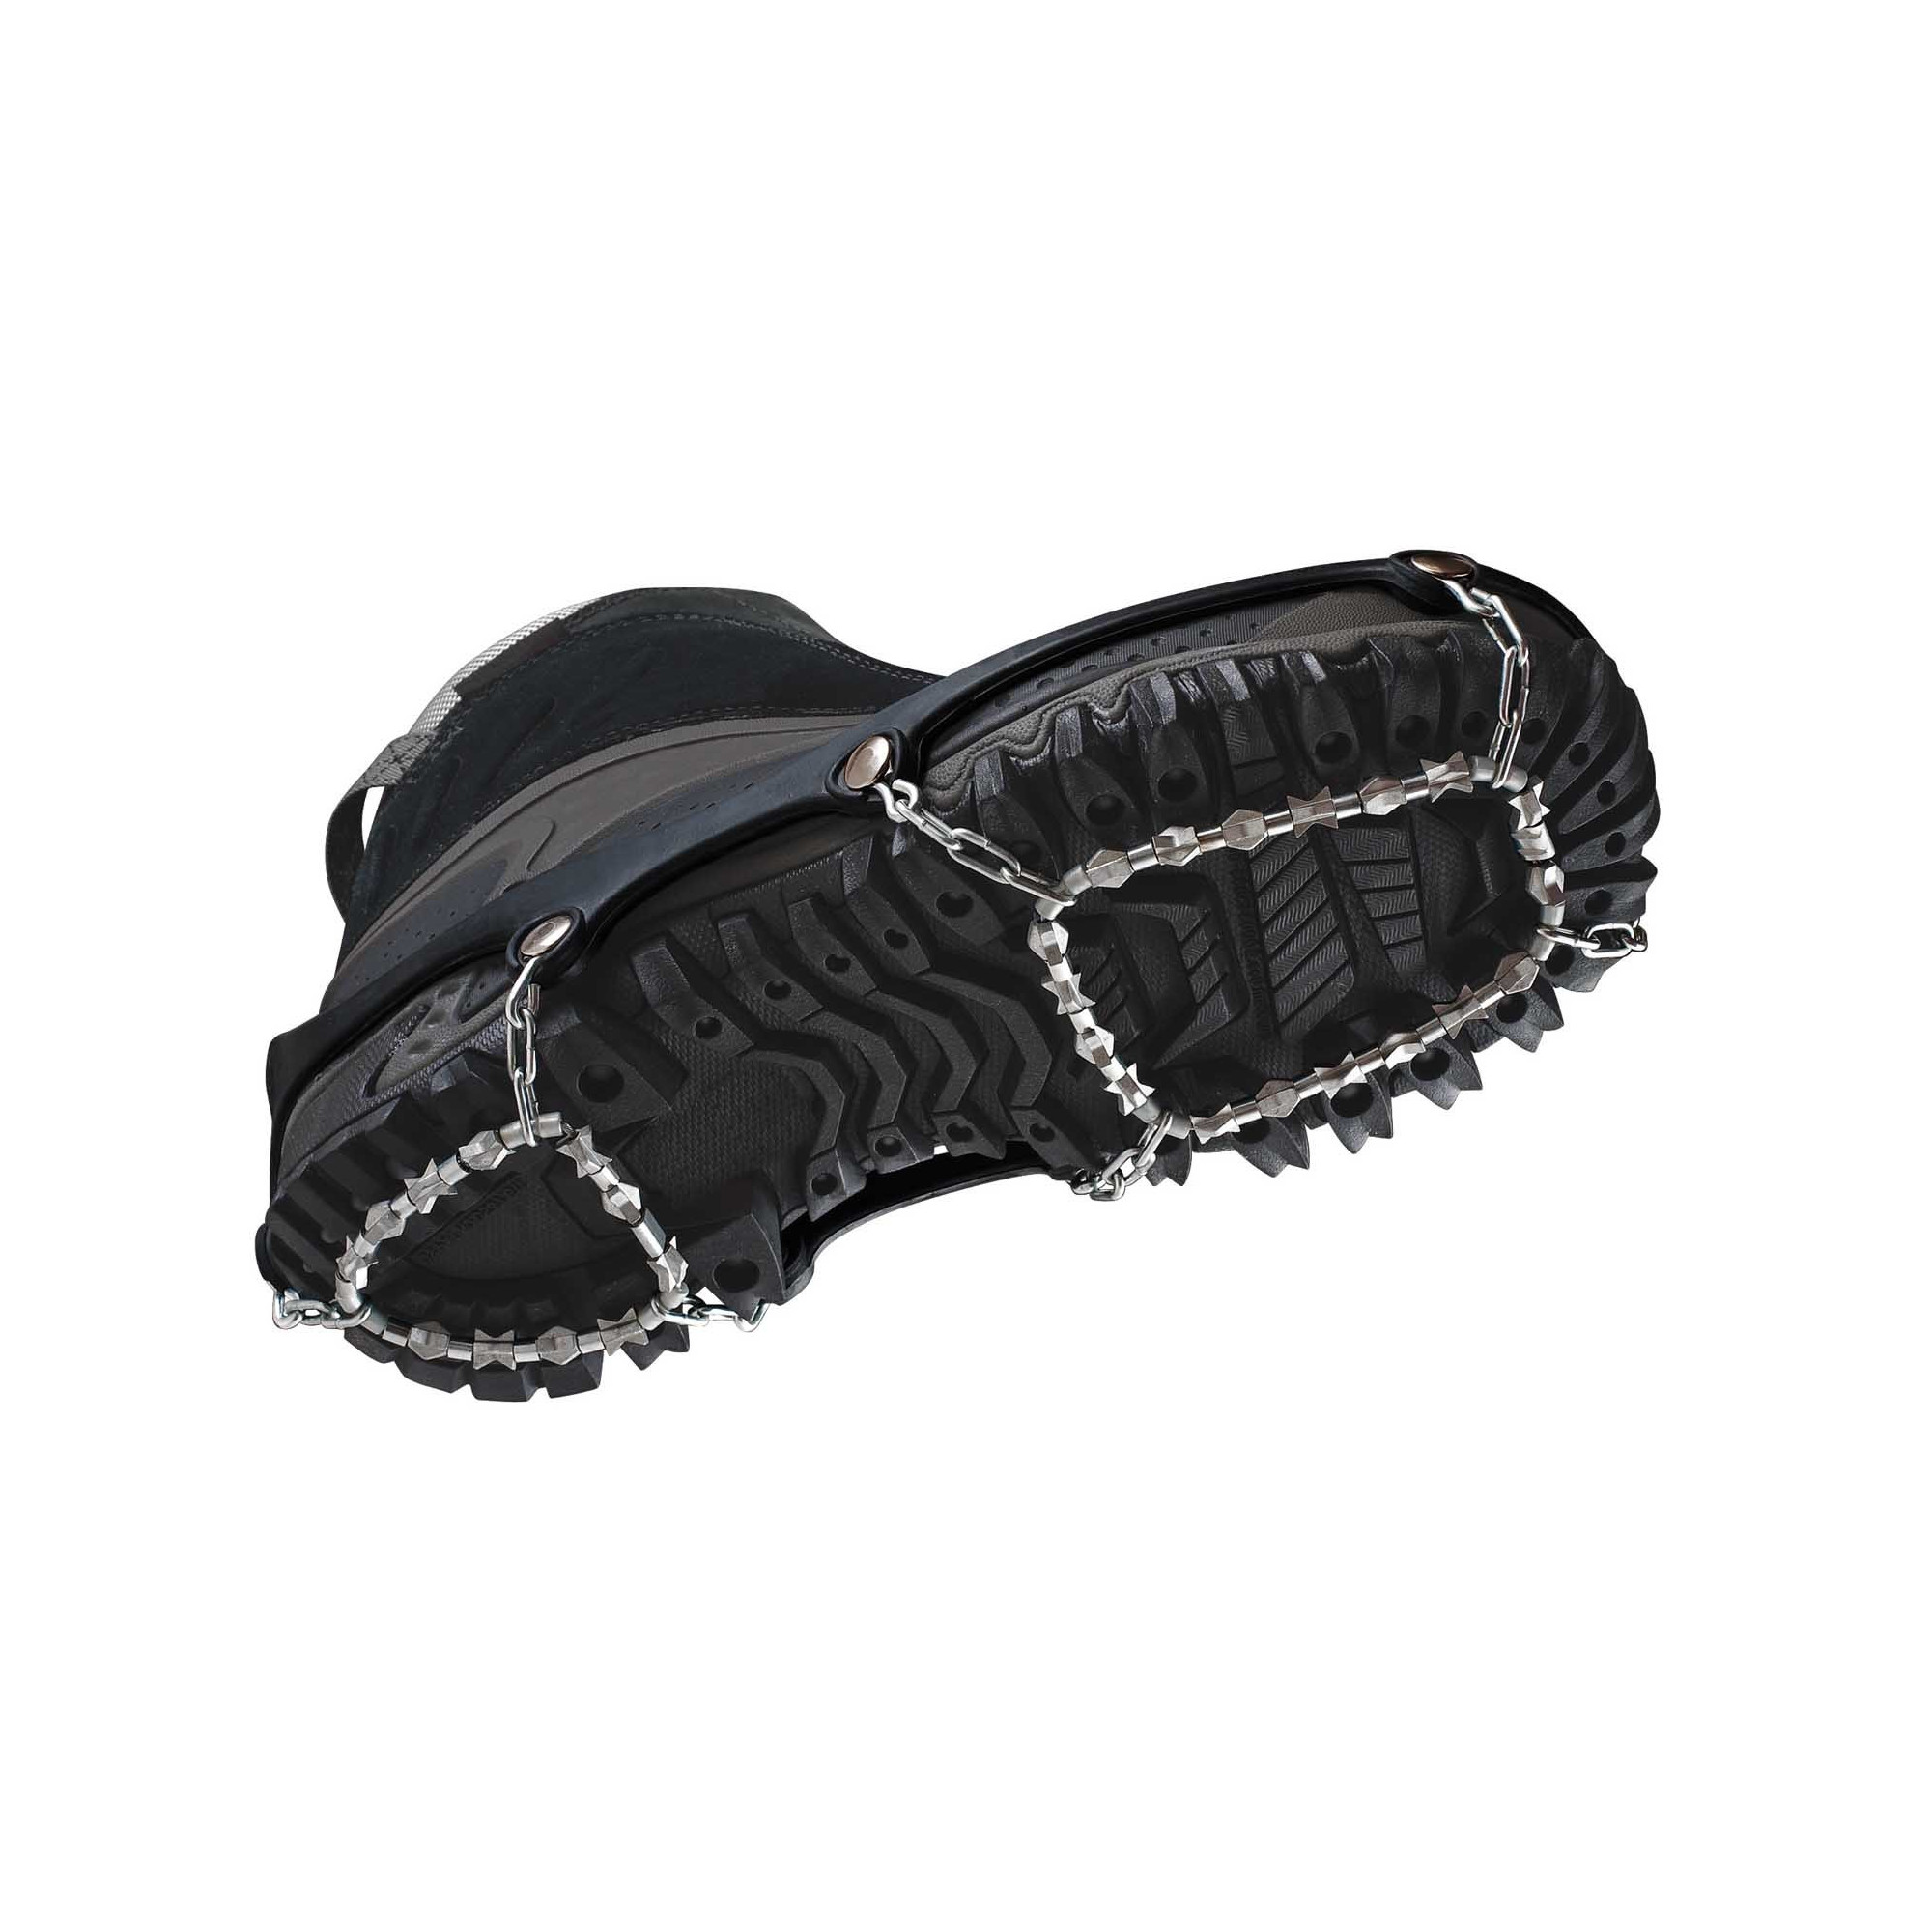 Chaines à neige pour chaussure, anti-glisse, crampons pour chaussures anti- verglas